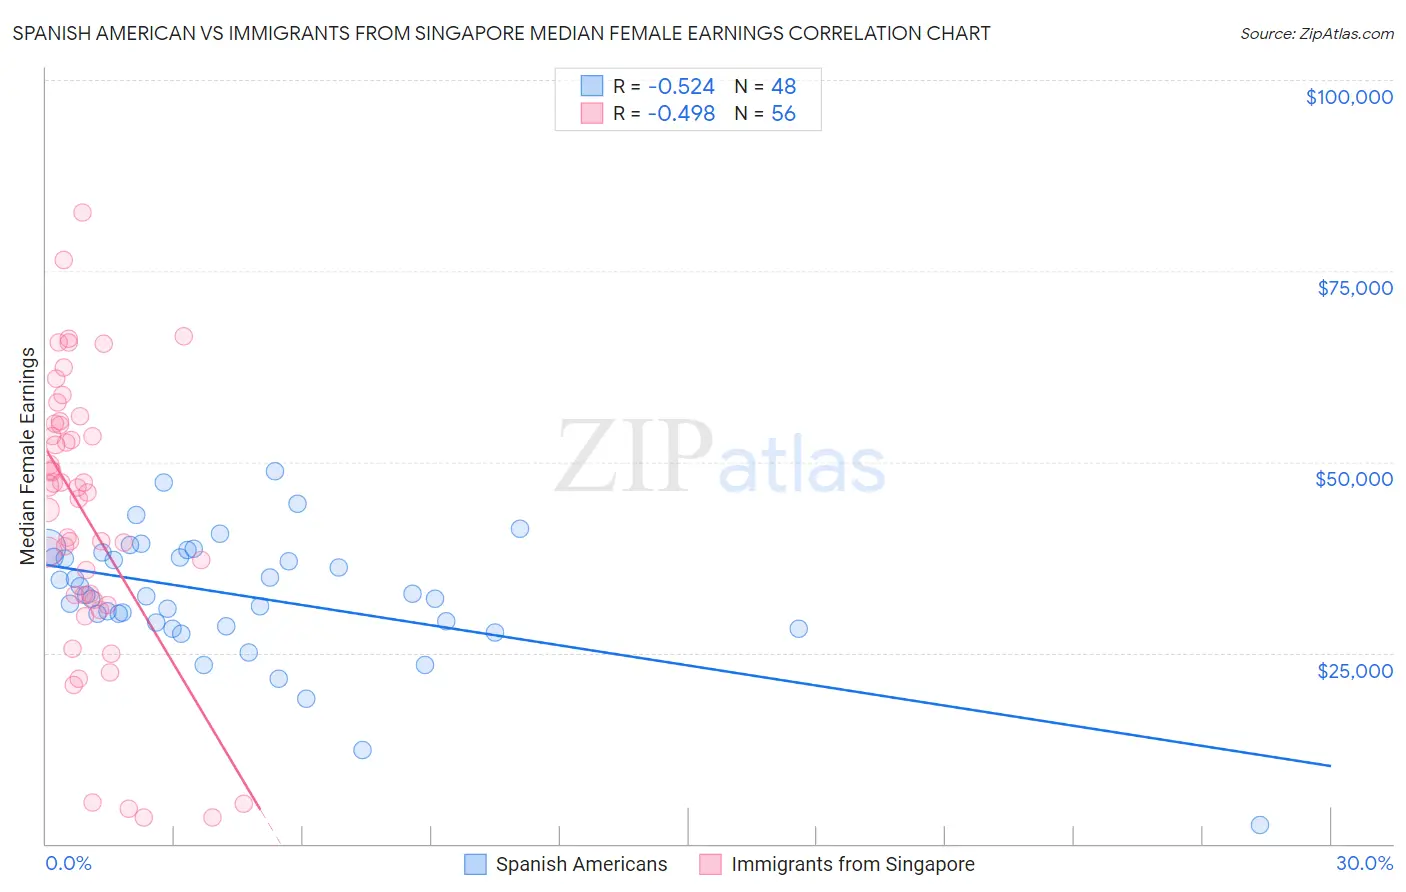 Spanish American vs Immigrants from Singapore Median Female Earnings